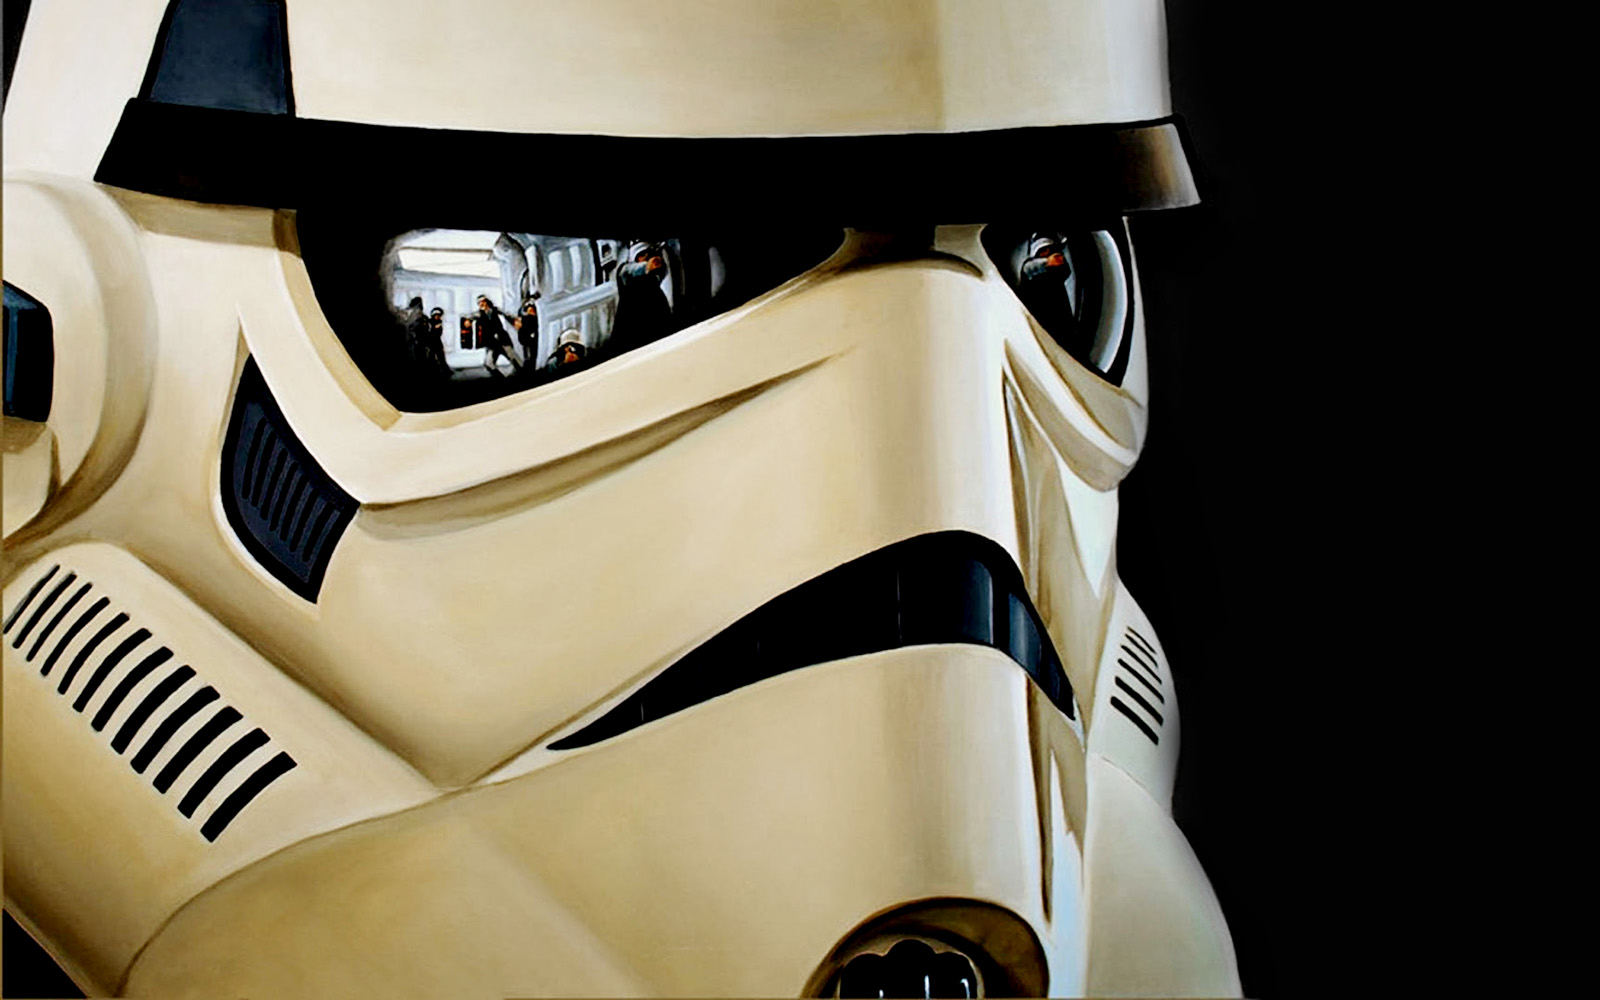 Stormtroopers Star Wars HD Wallpaper Desktop